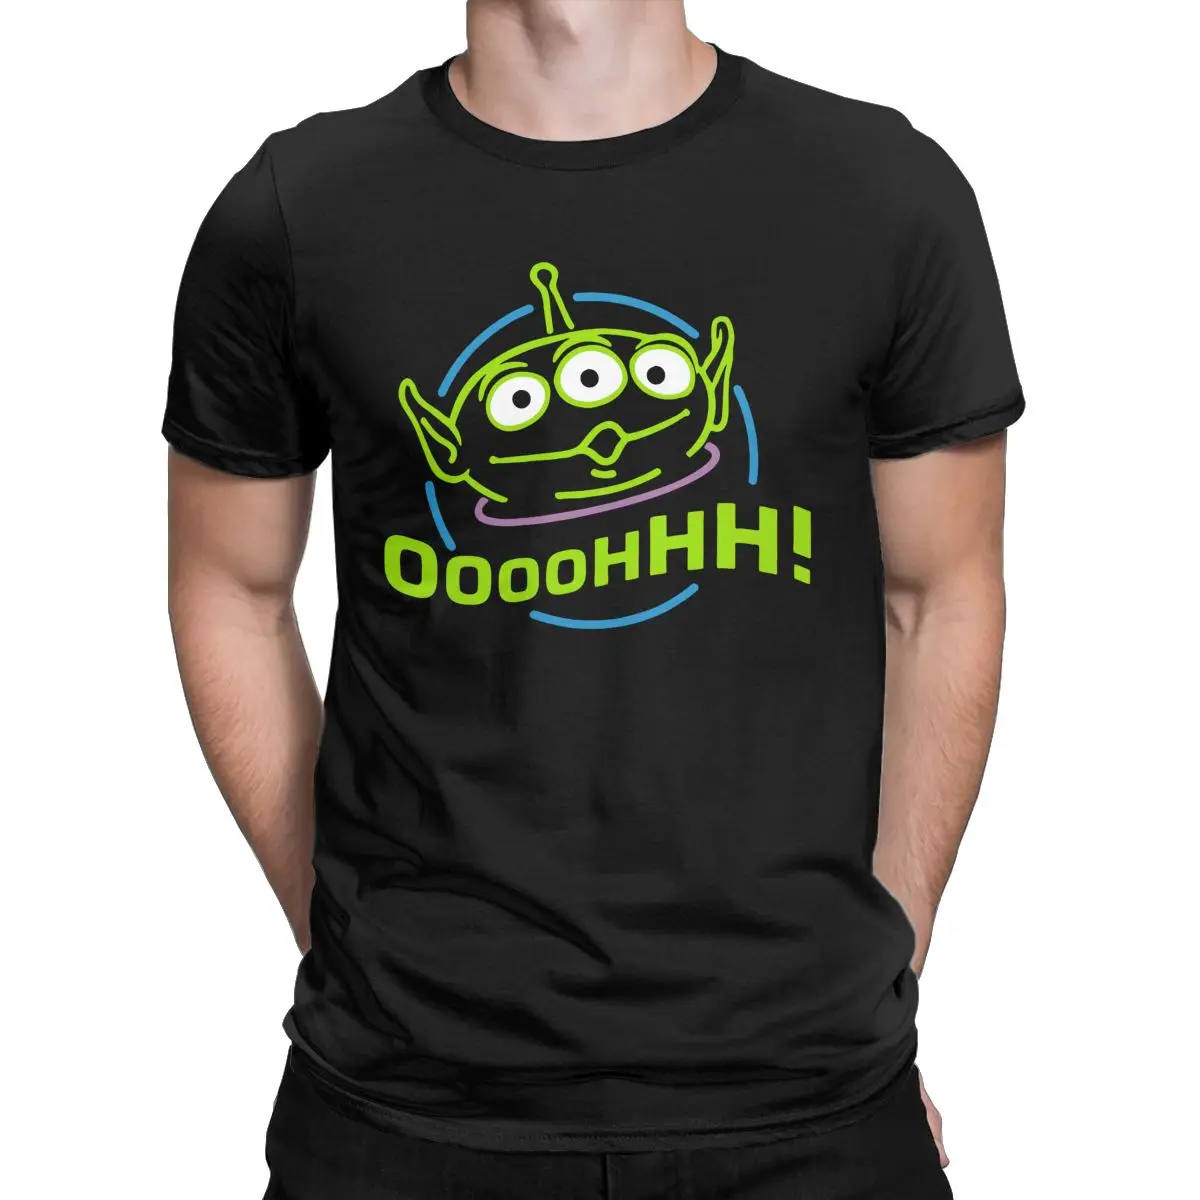 Disney Oooohhhhhh! Alien T-Shirts Men Toy Story Fashion Cotton Tee Shirt Crew Neck Short Sleeve T Shirt Graphic Printed Tops